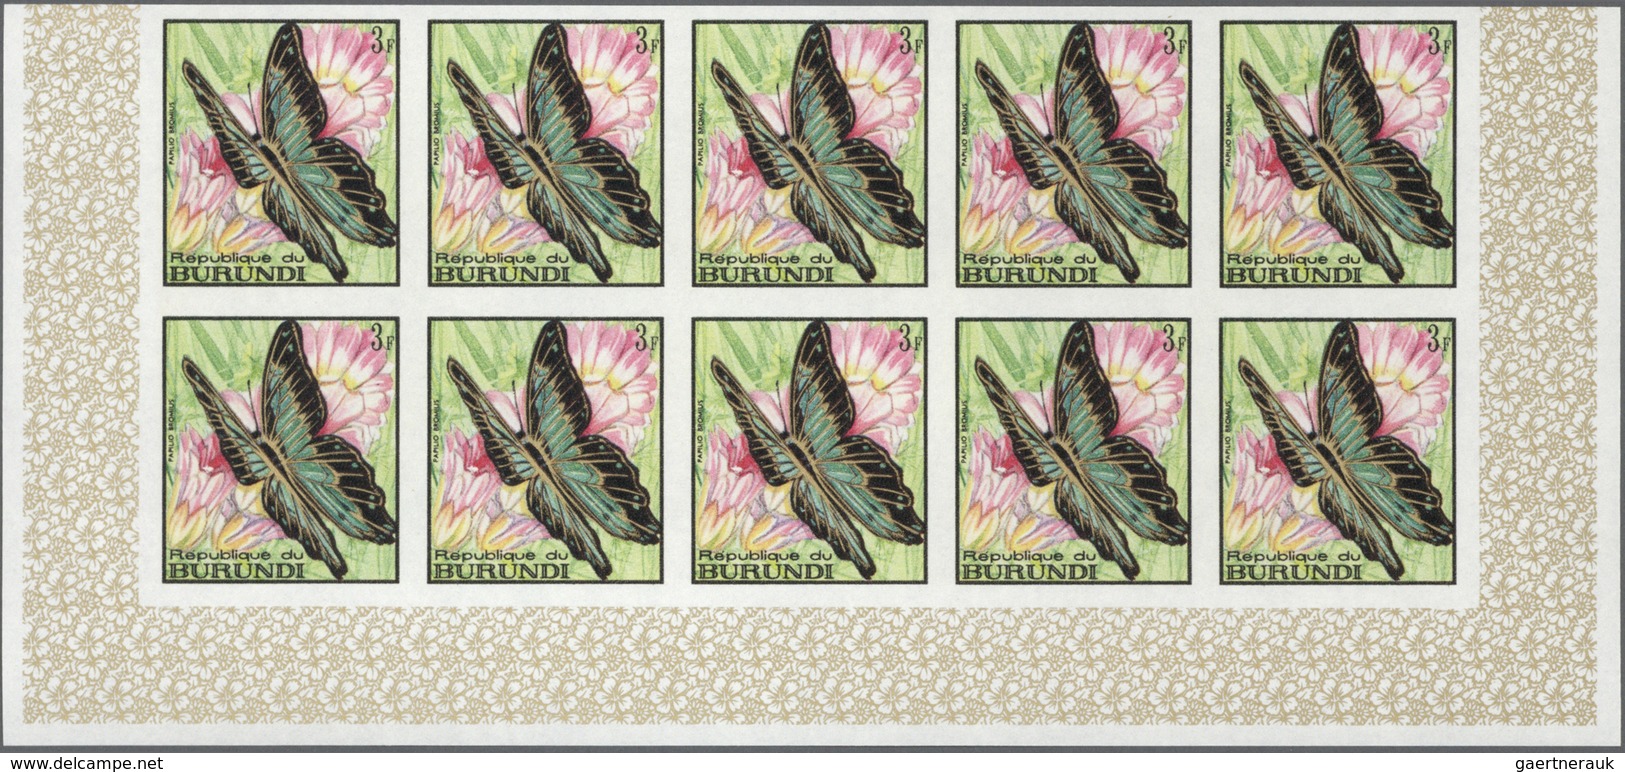 Burundi: 1968, Butterflies complete set of 16 in IMPERFORATE blocks of ten from lower margins, mint